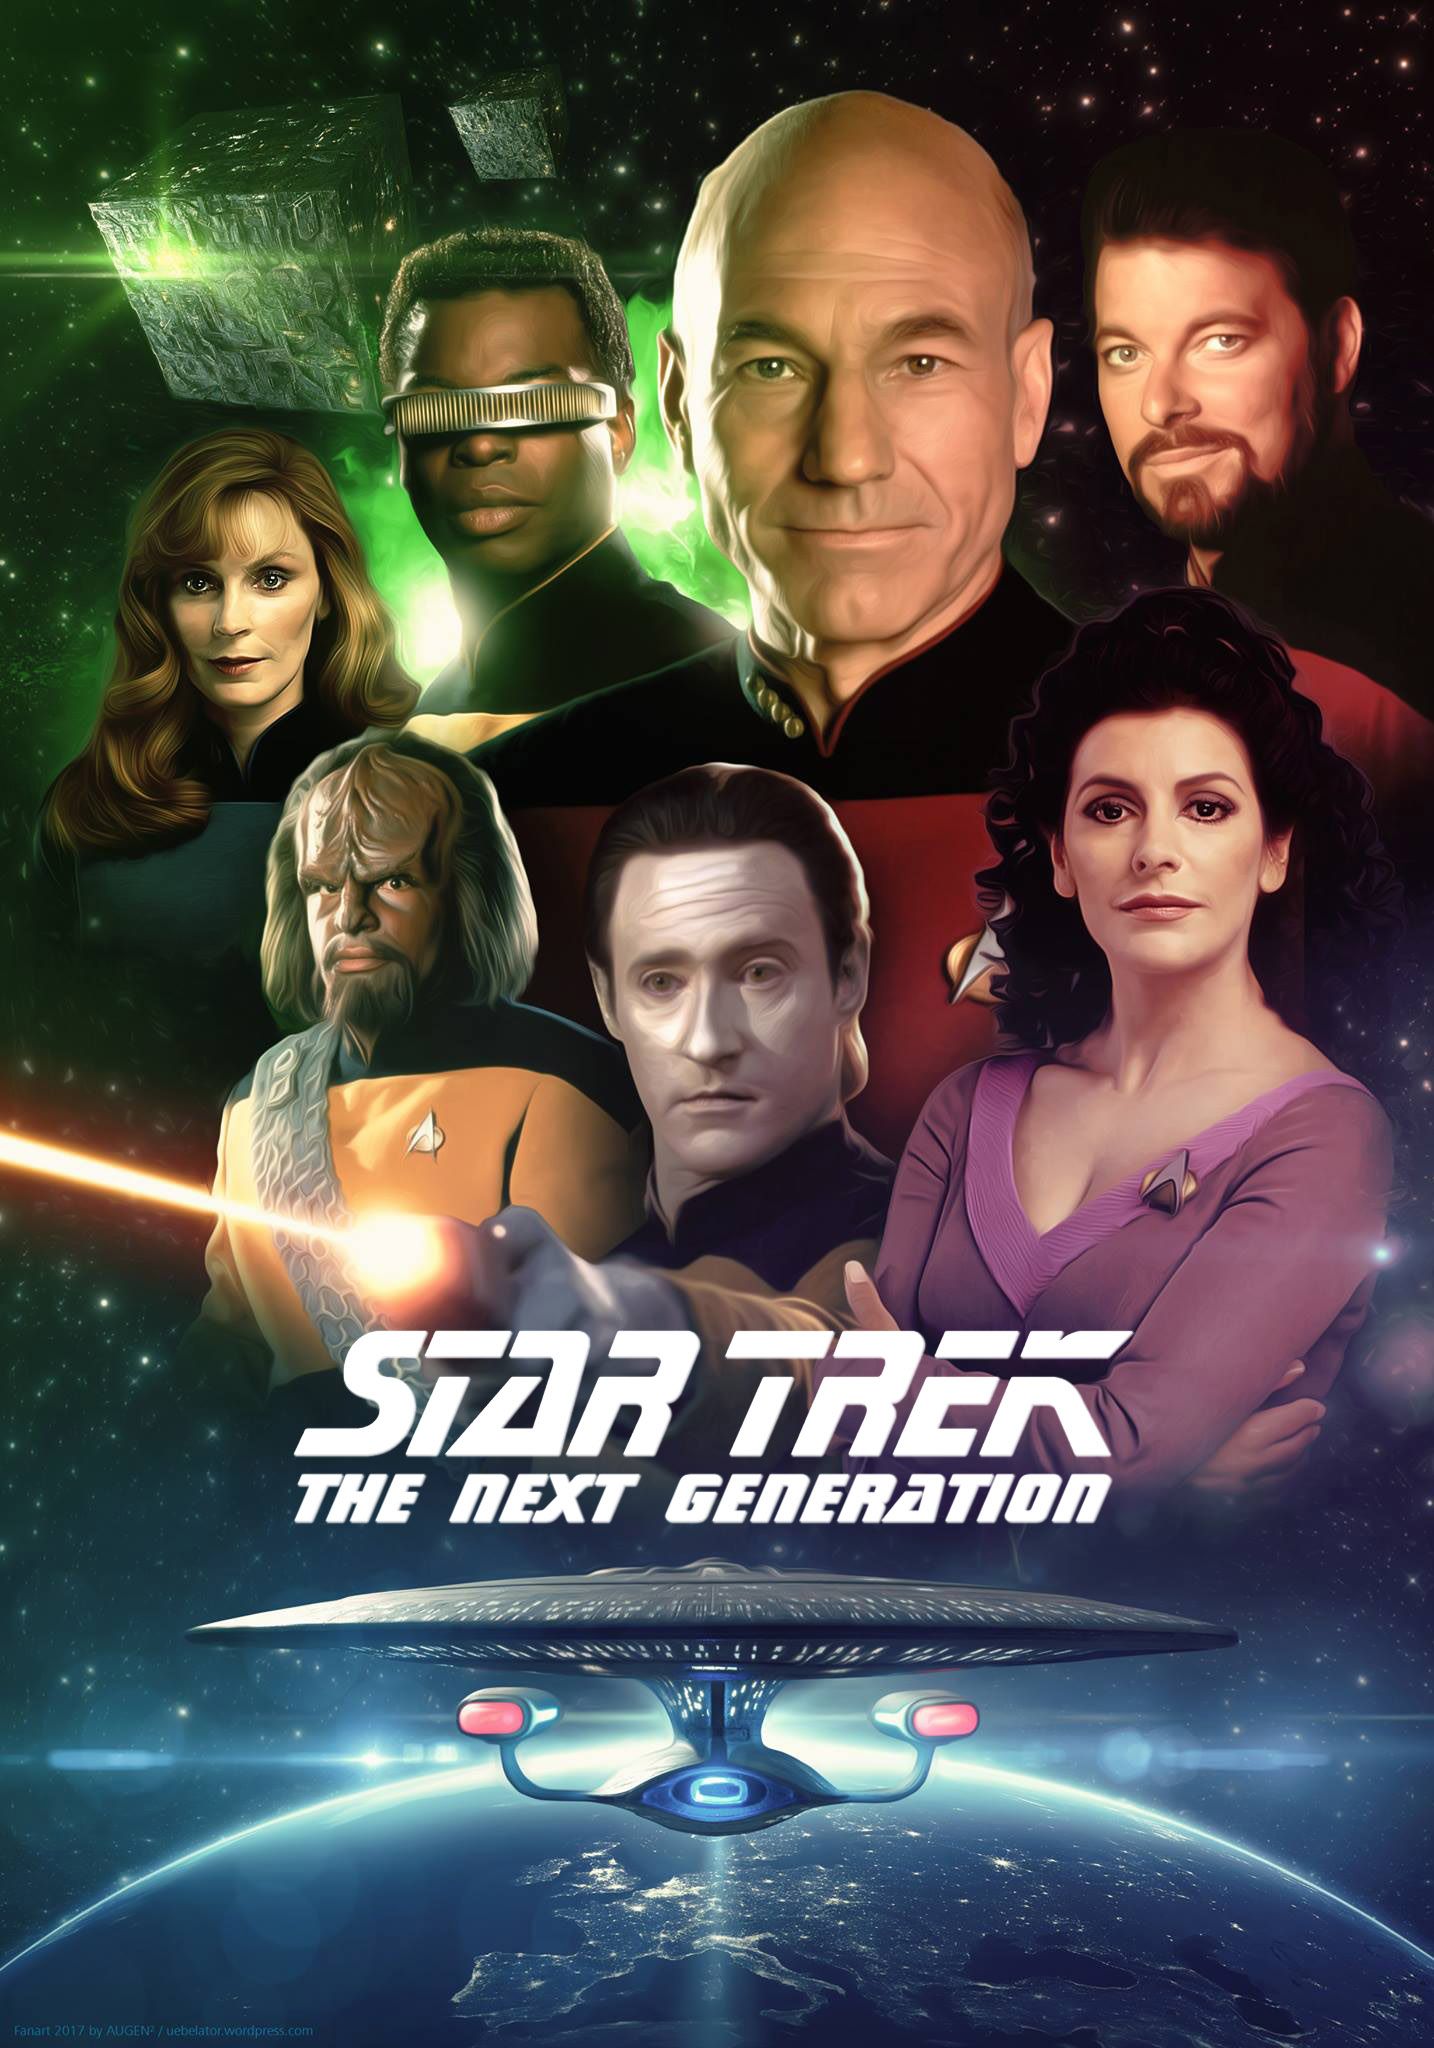 Star Trek The Next Generation TV Show Poster